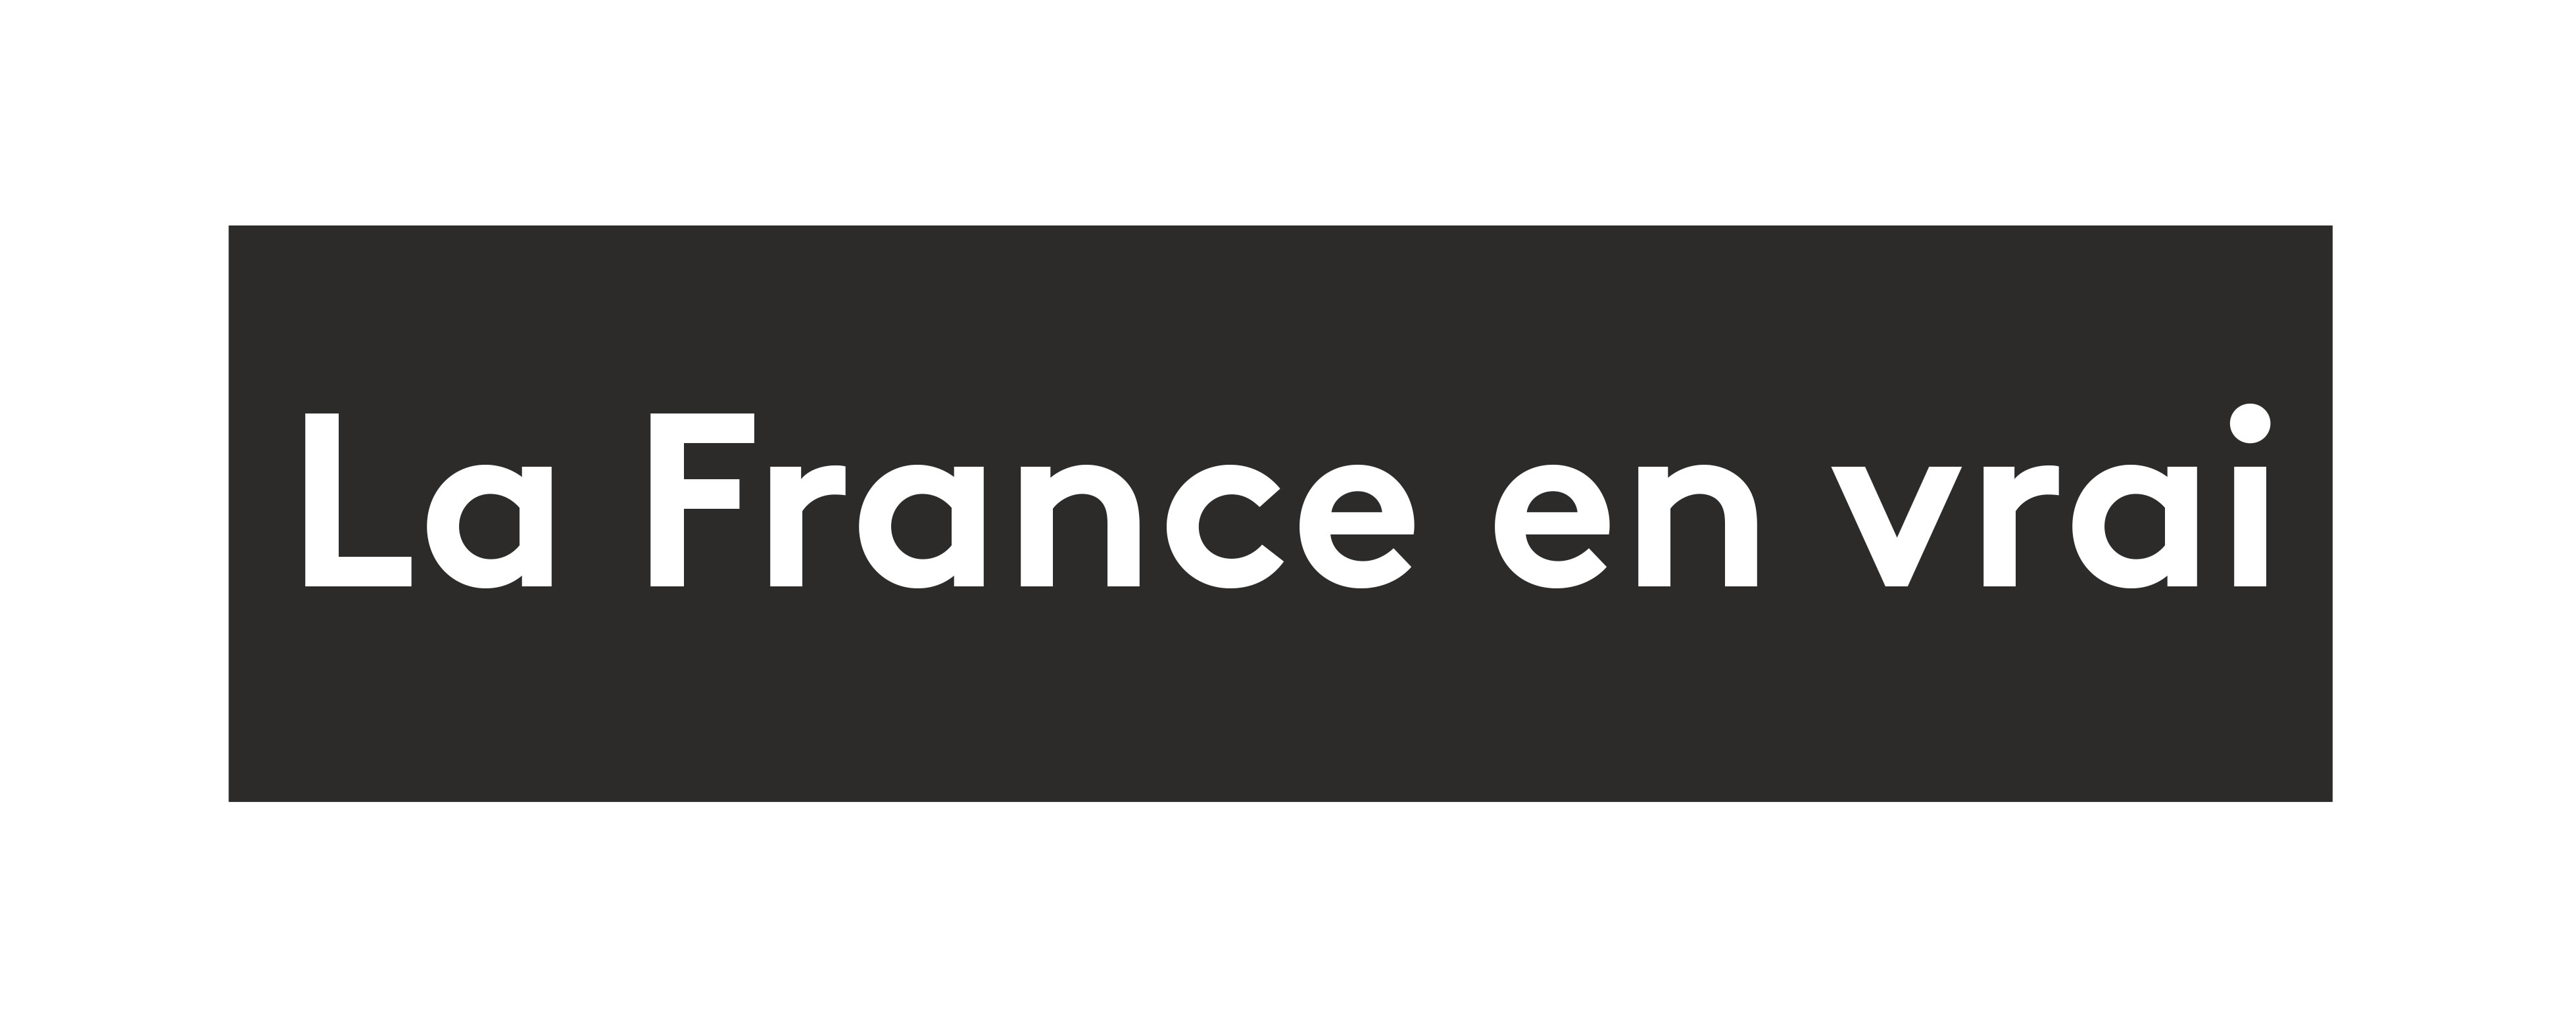 Logo La France en vrai 